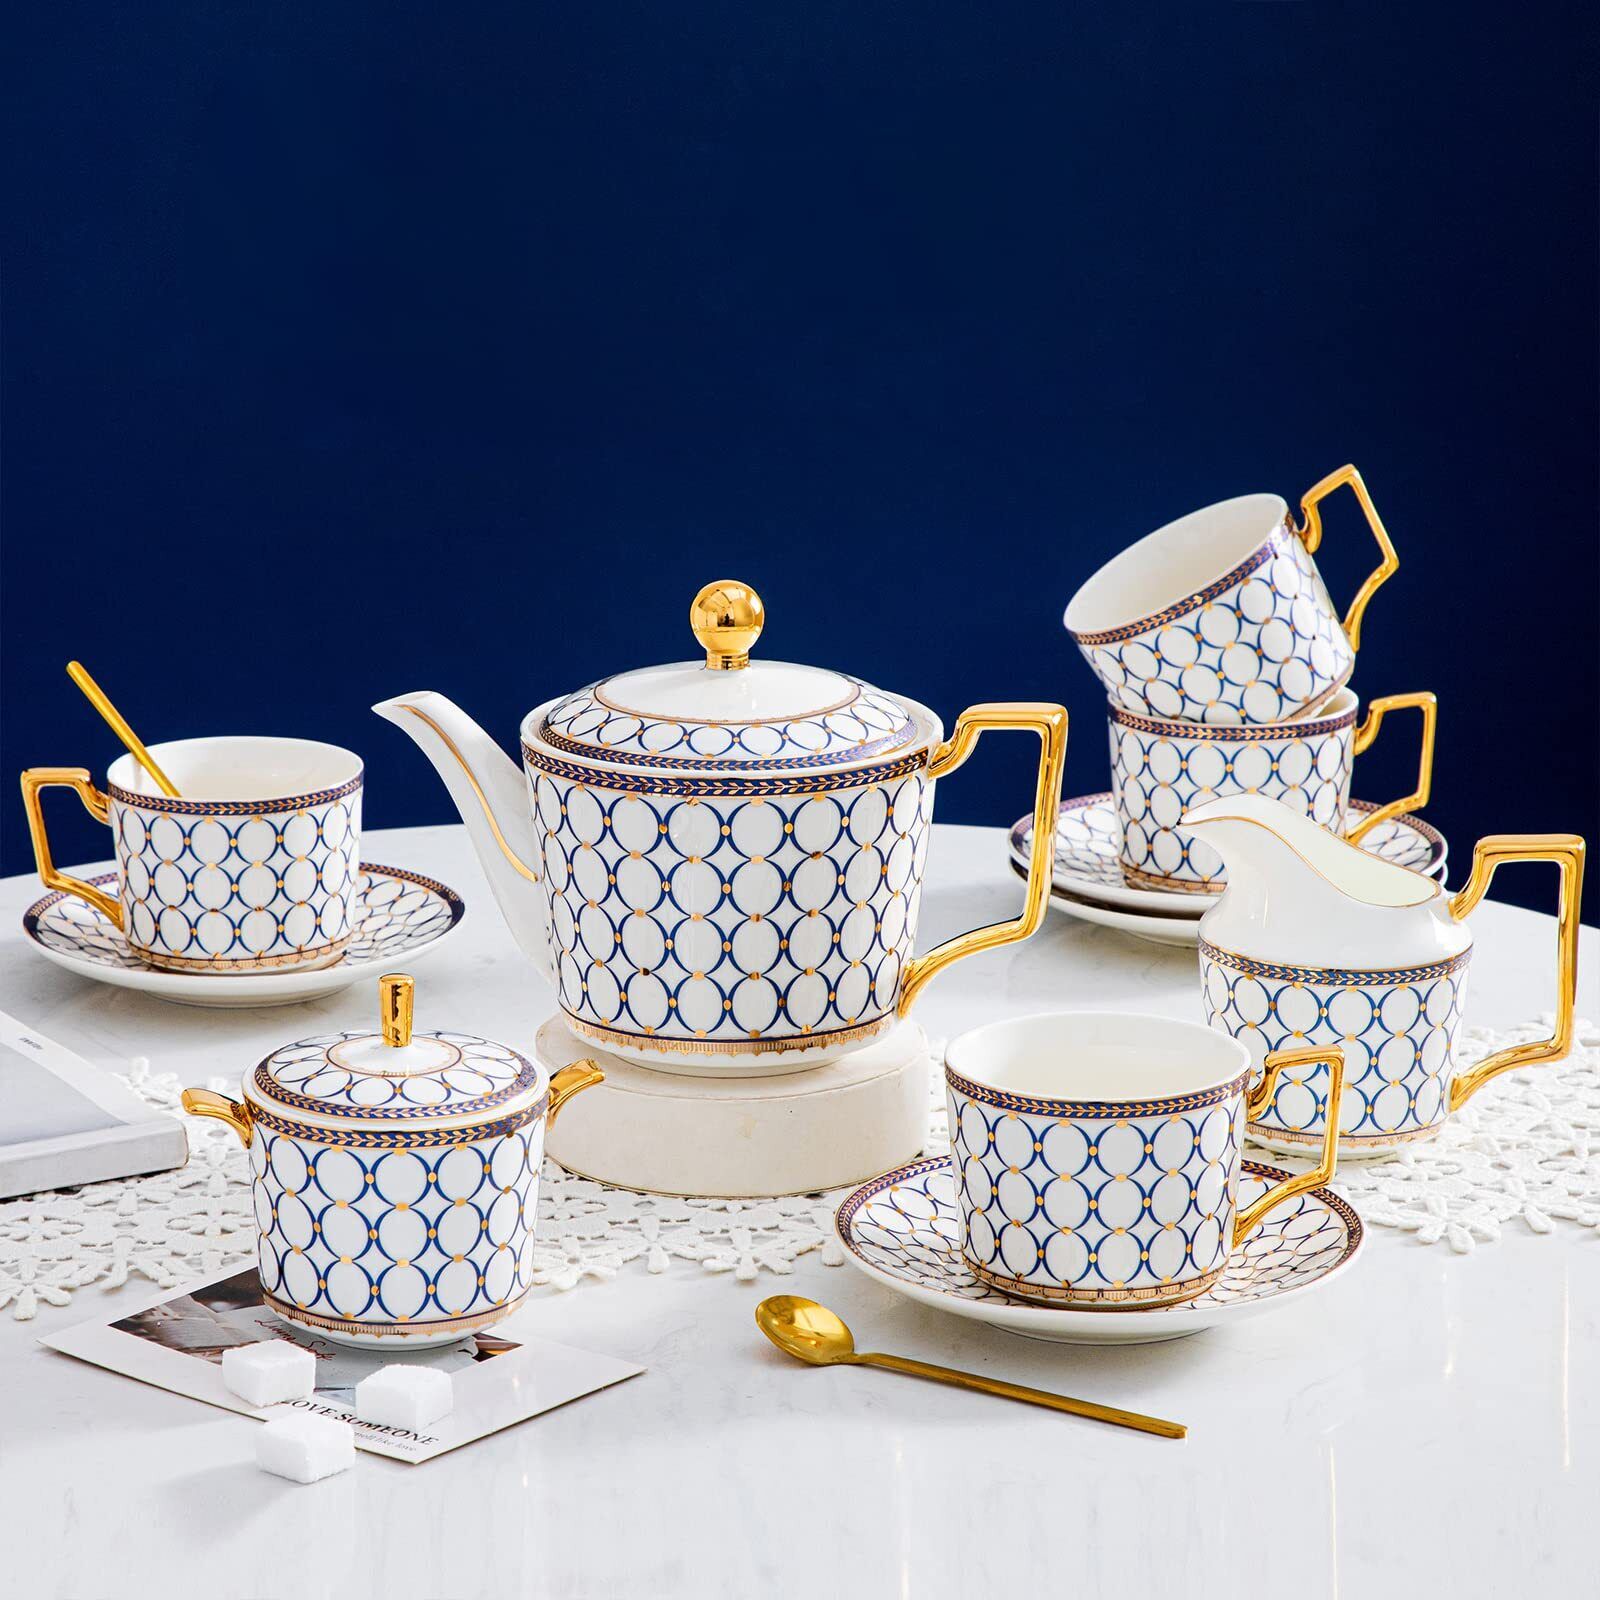 -15-Piece Porcelain Tea Service Set for 4, Bone China Coffee Tea Sets,Tea Cup...